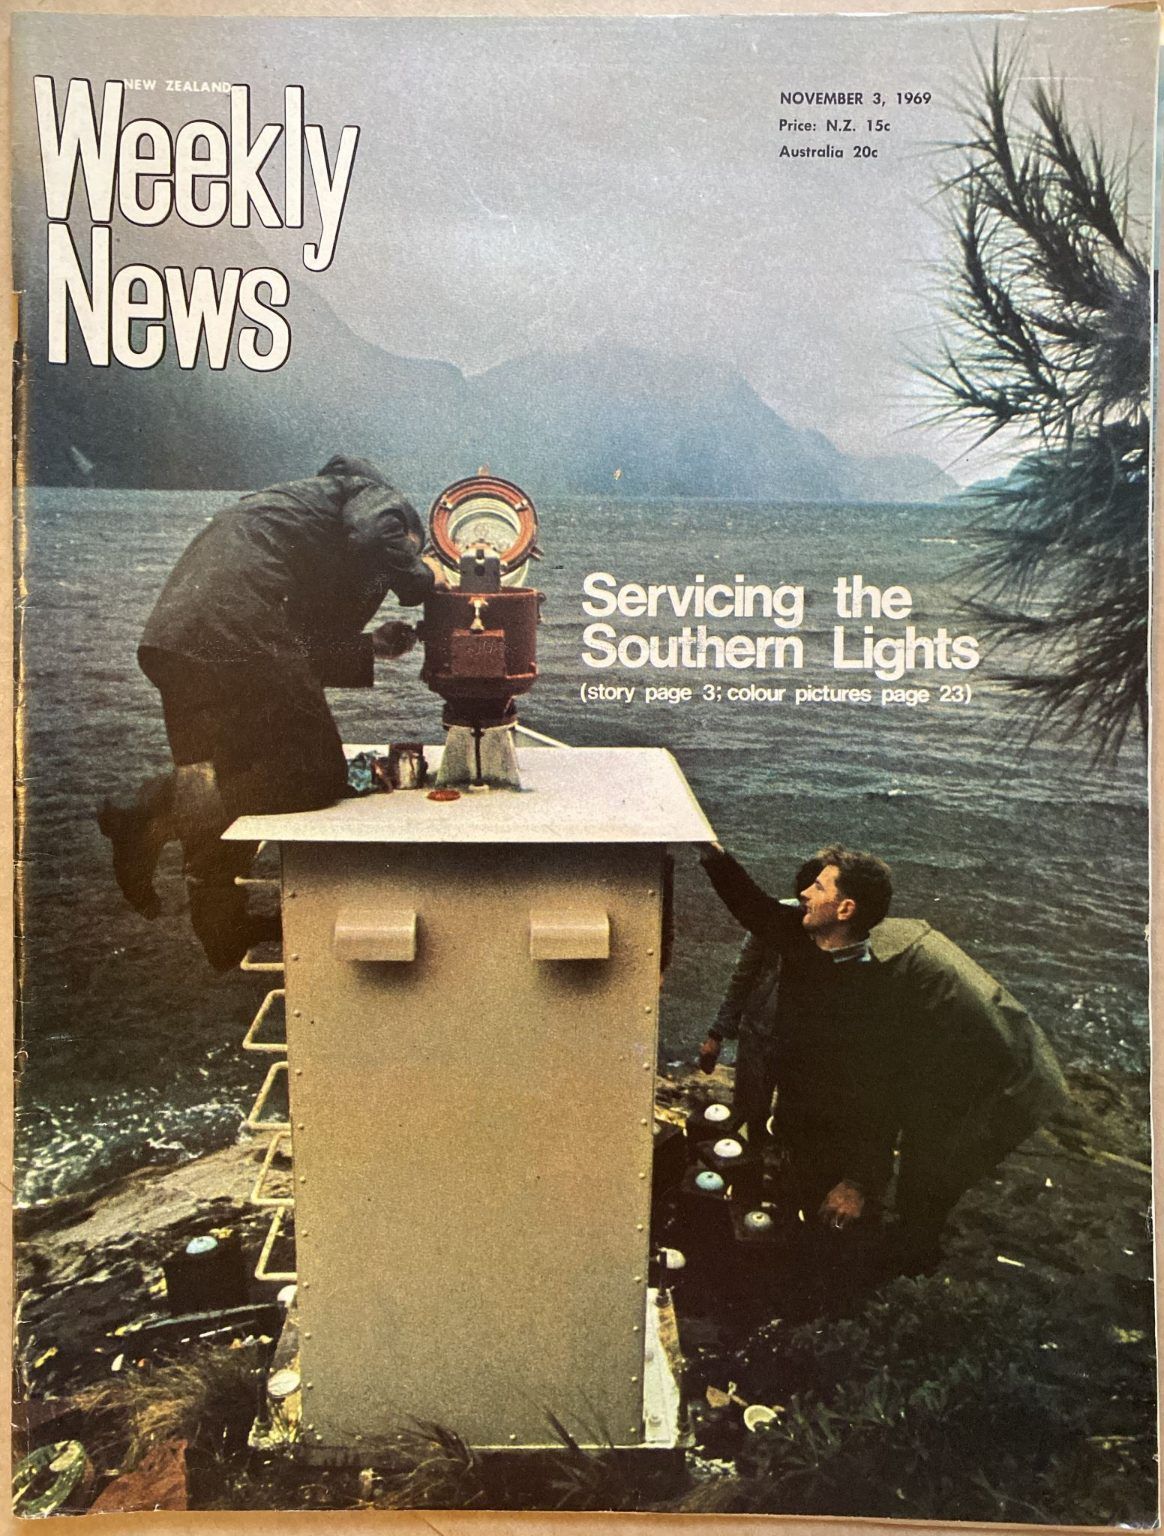 OLD NEWSPAPER: New Zealand Weekly News, No. 5527, 3 November 1969